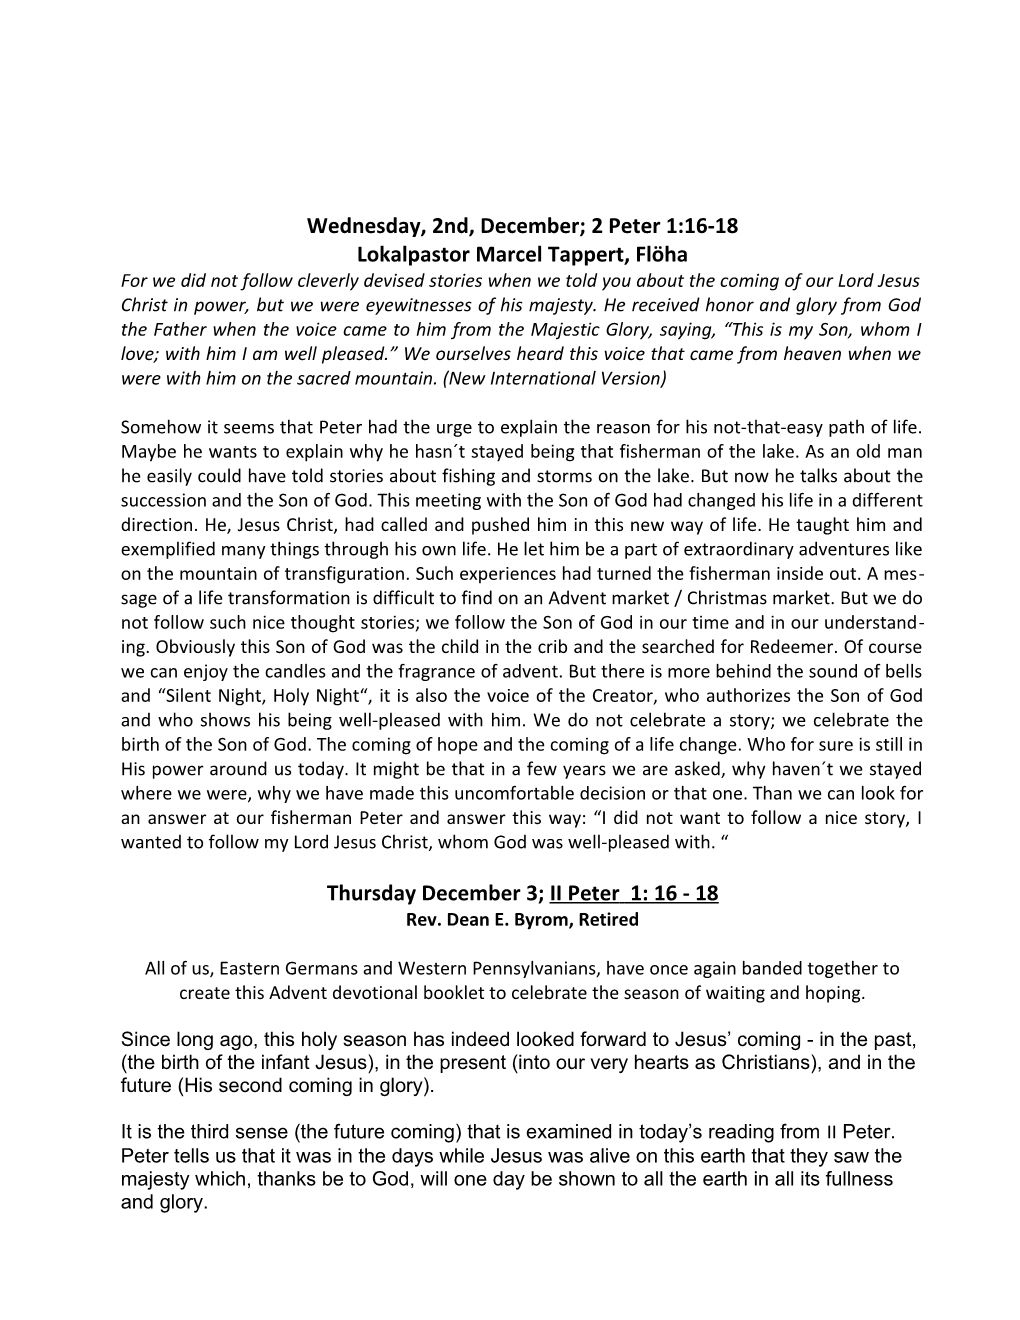 Daily Advent/Christmas Devotional